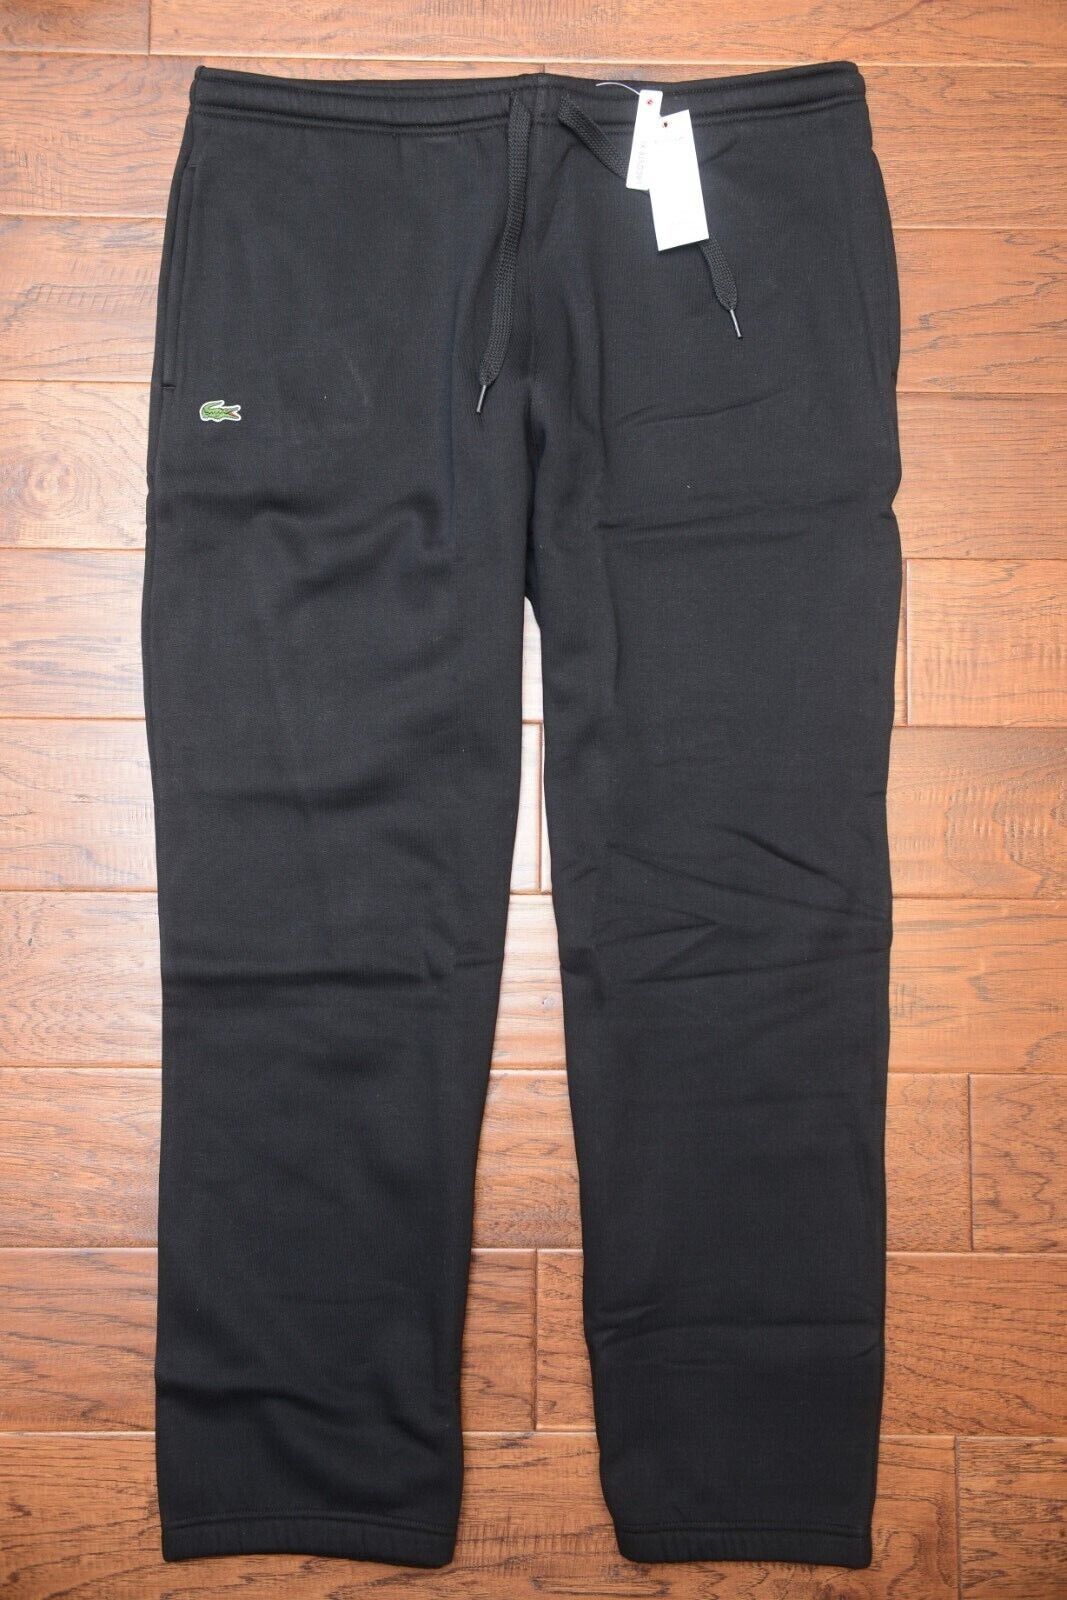 Lacoste Sport XH8426 Men's Black Fleece Cotton Sweatpants Big & Tall 5XLB EU 12R - $54.44